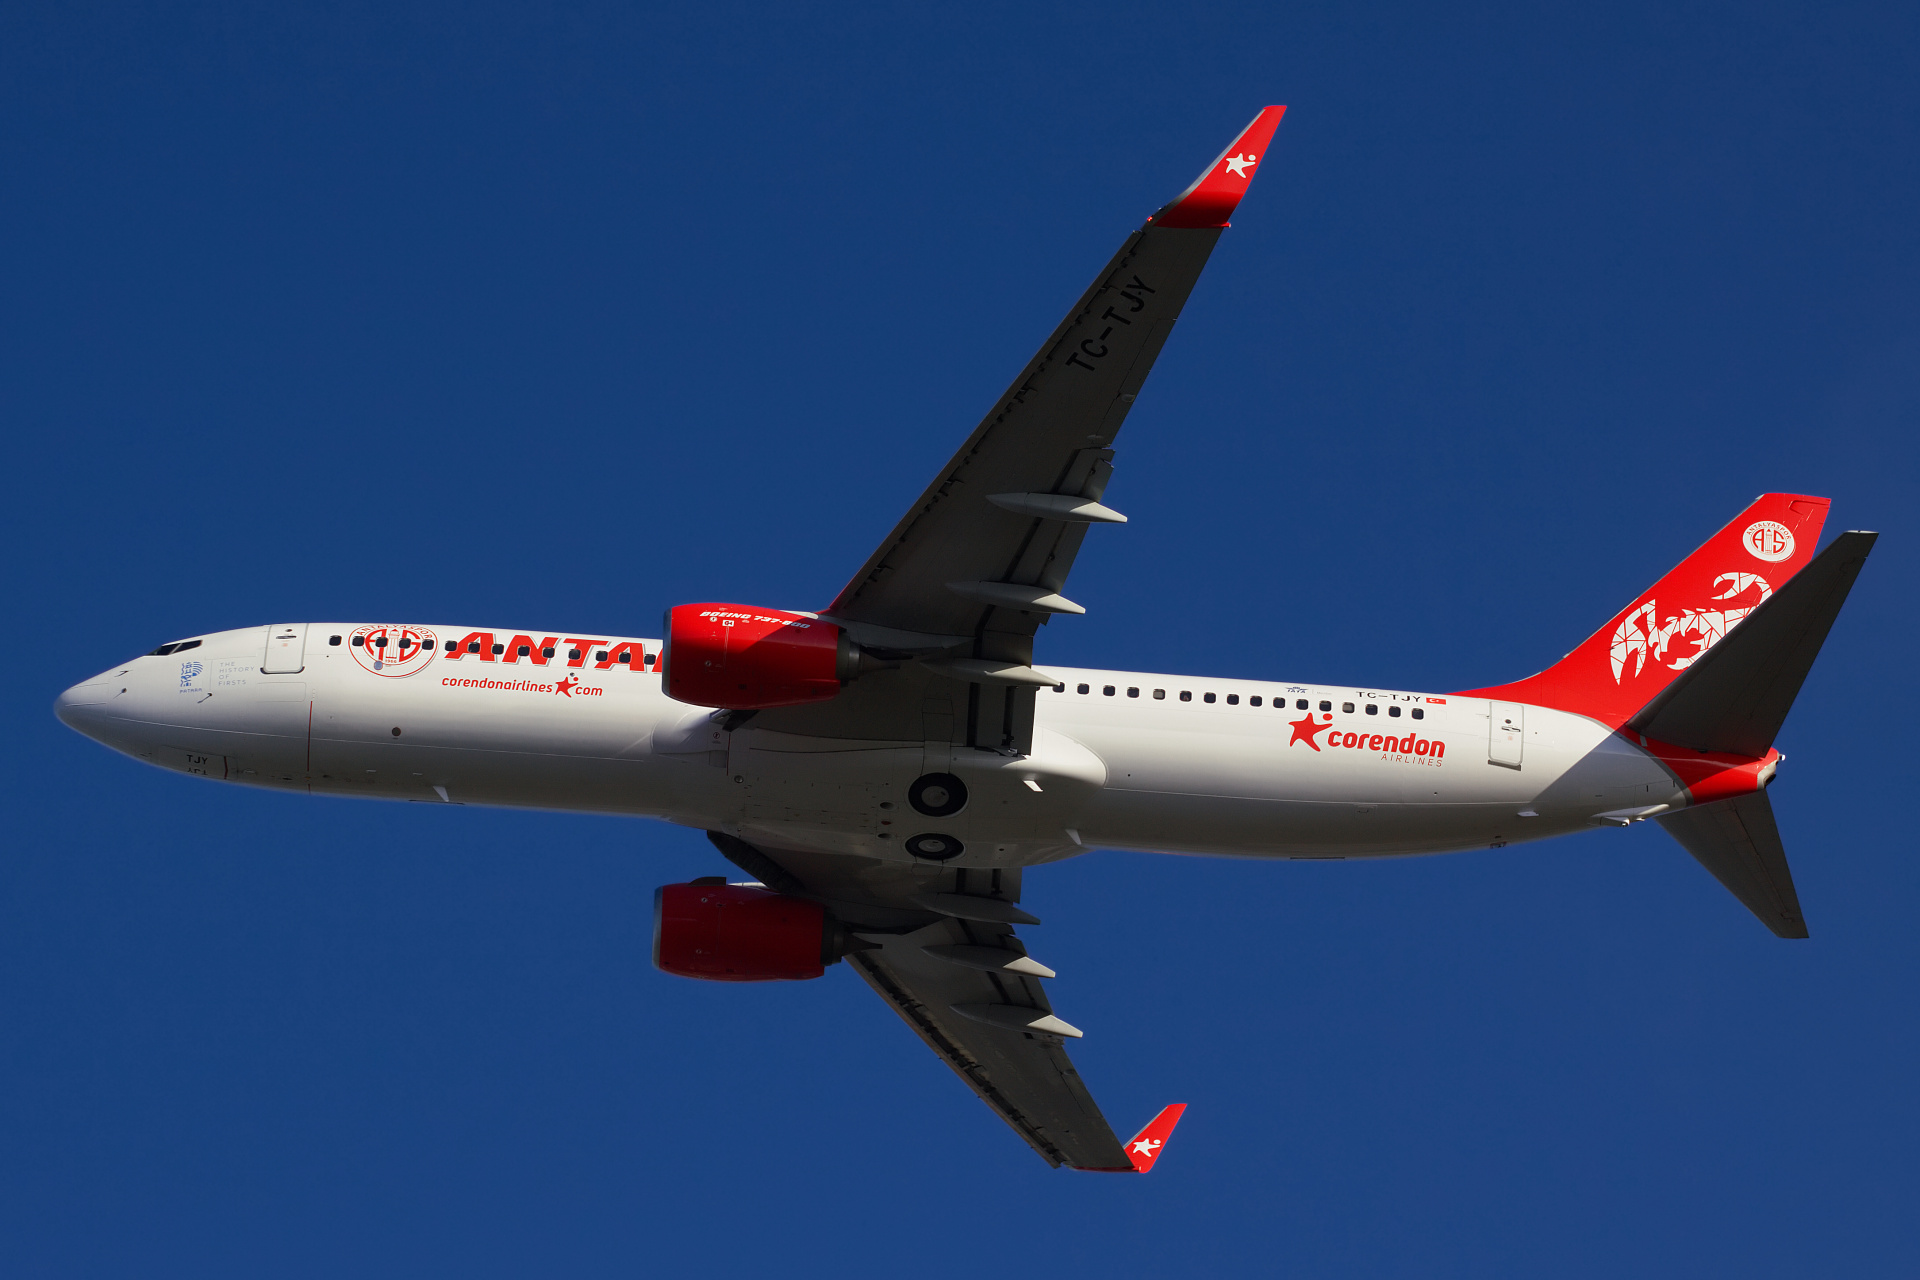 TC-TJY (Antalyaspor livery) (Aircraft » EPWA Spotting » Boeing 737-800 » Corendon Airlines)